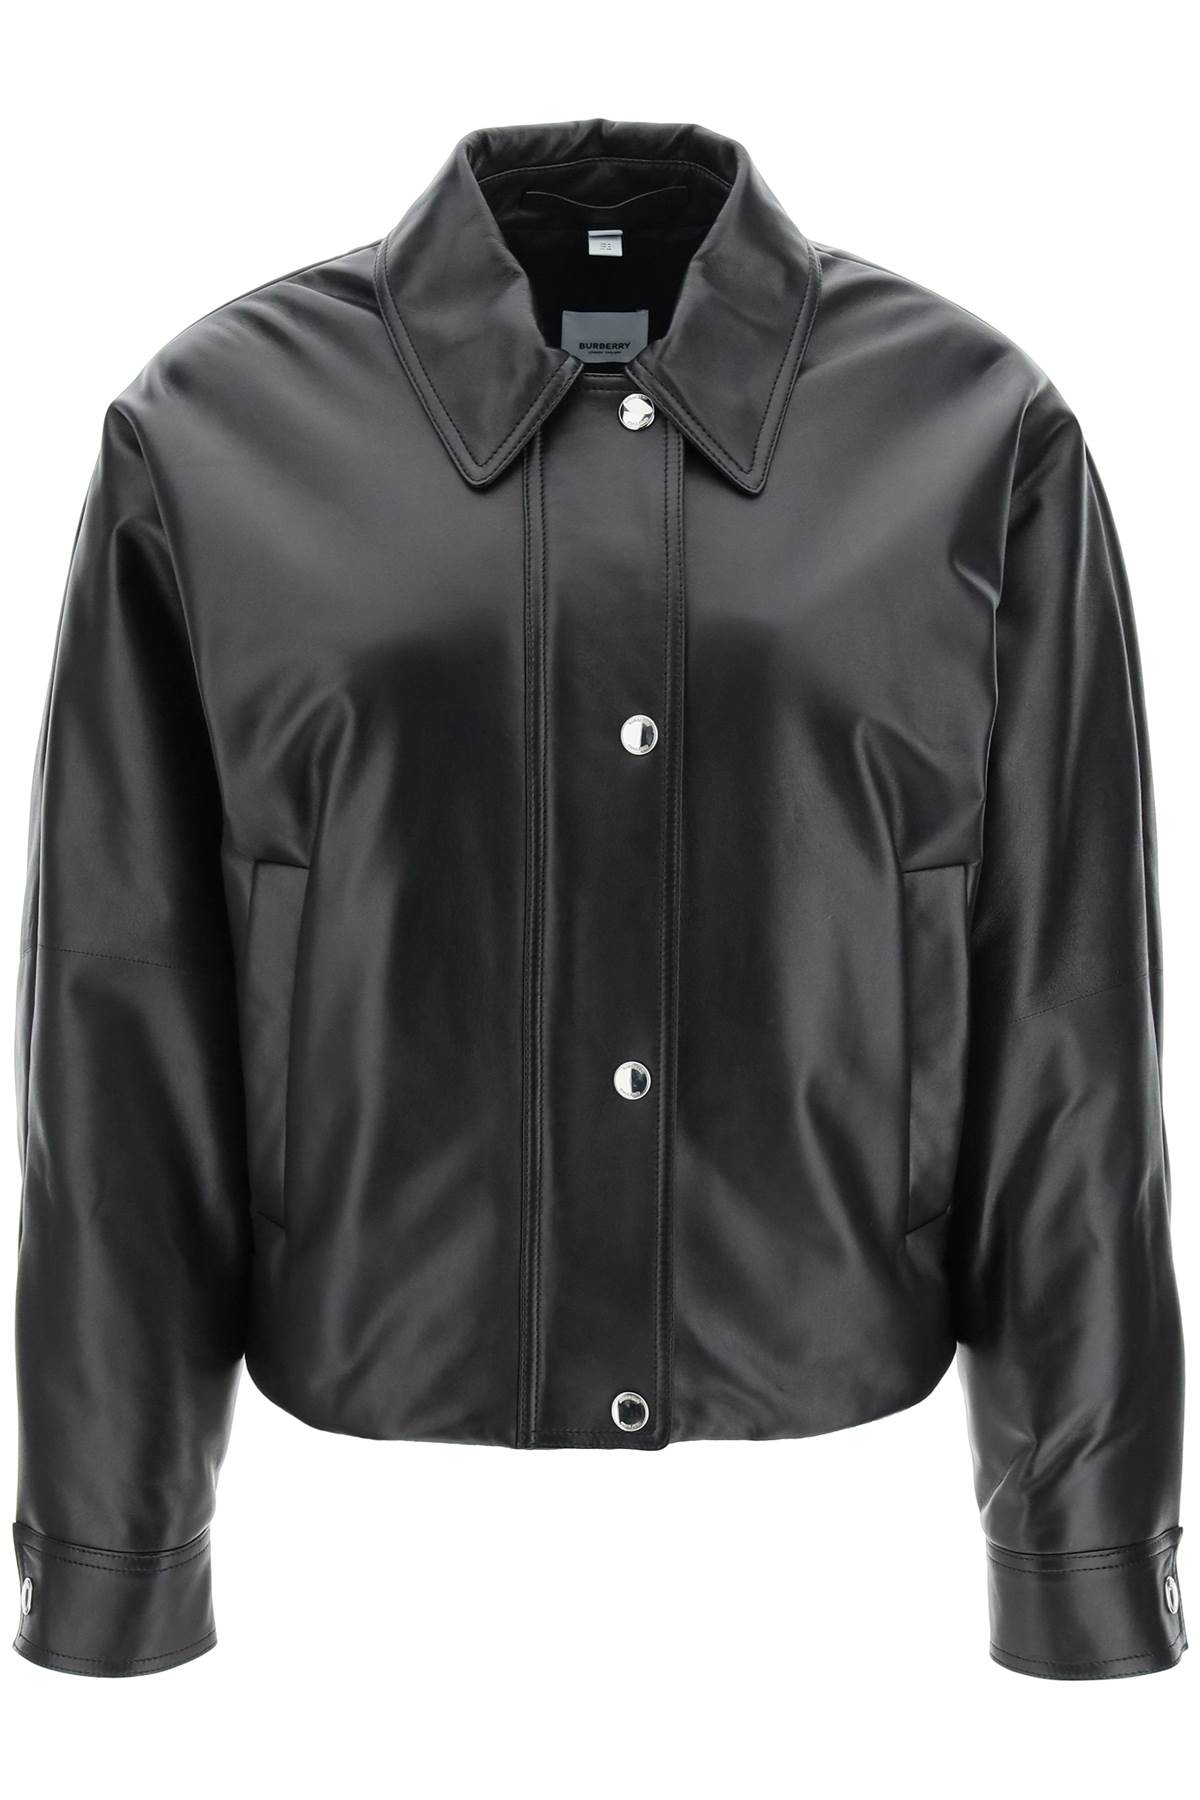 Burberry Embroidered Ekd Leather Jacket-Burberry-6-Urbanheer